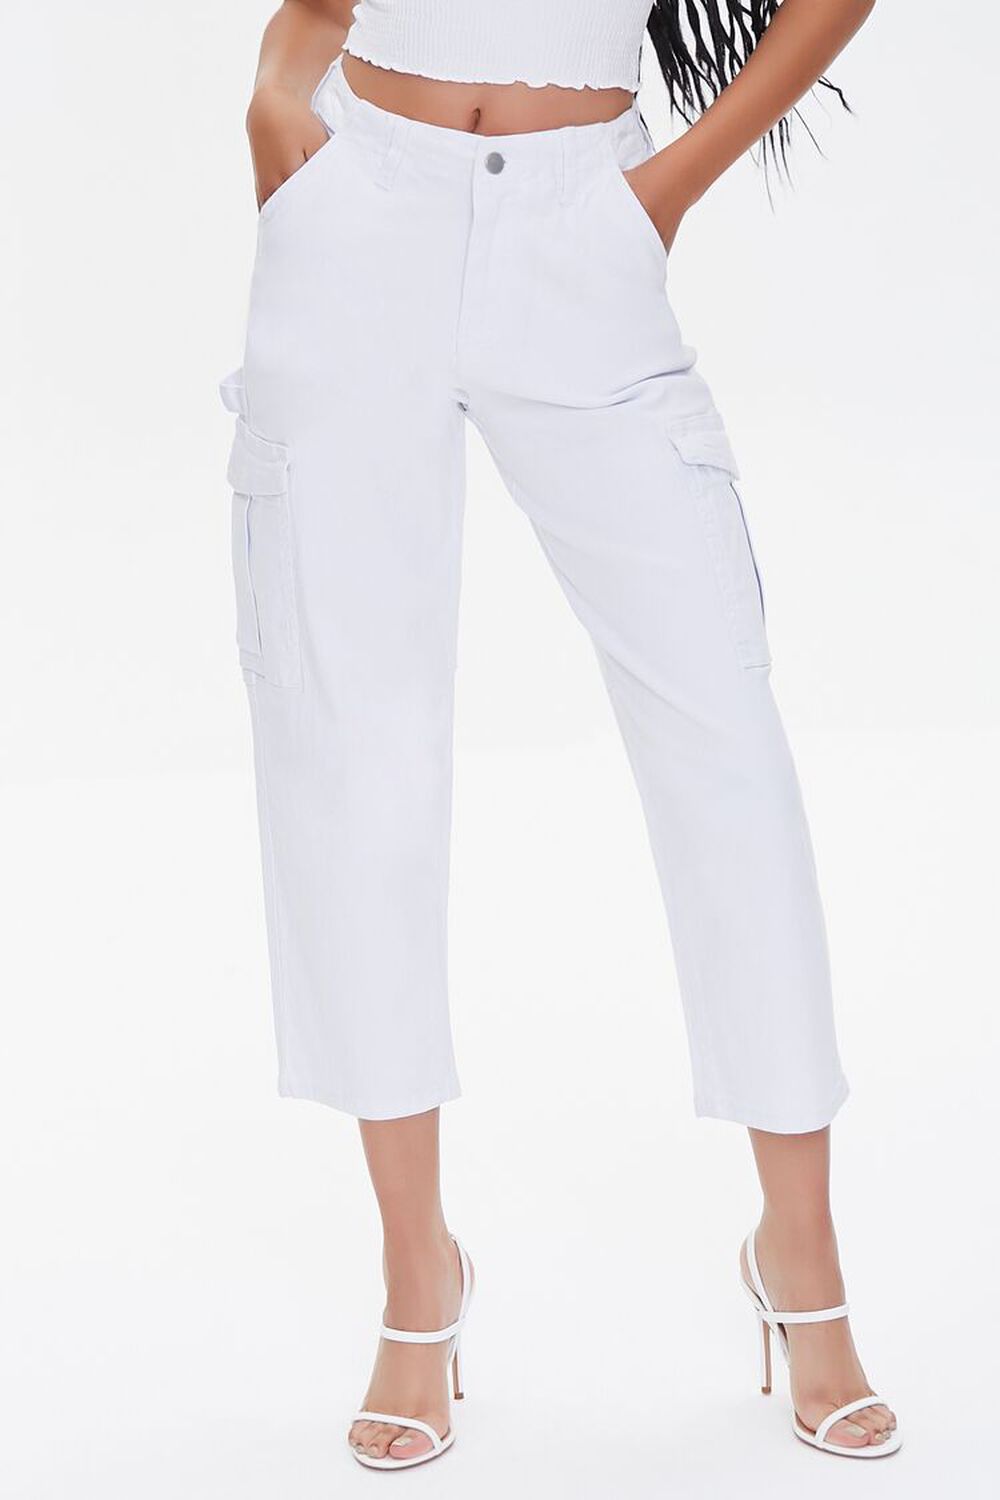 WHITE Capri Cargo Pants, image 2